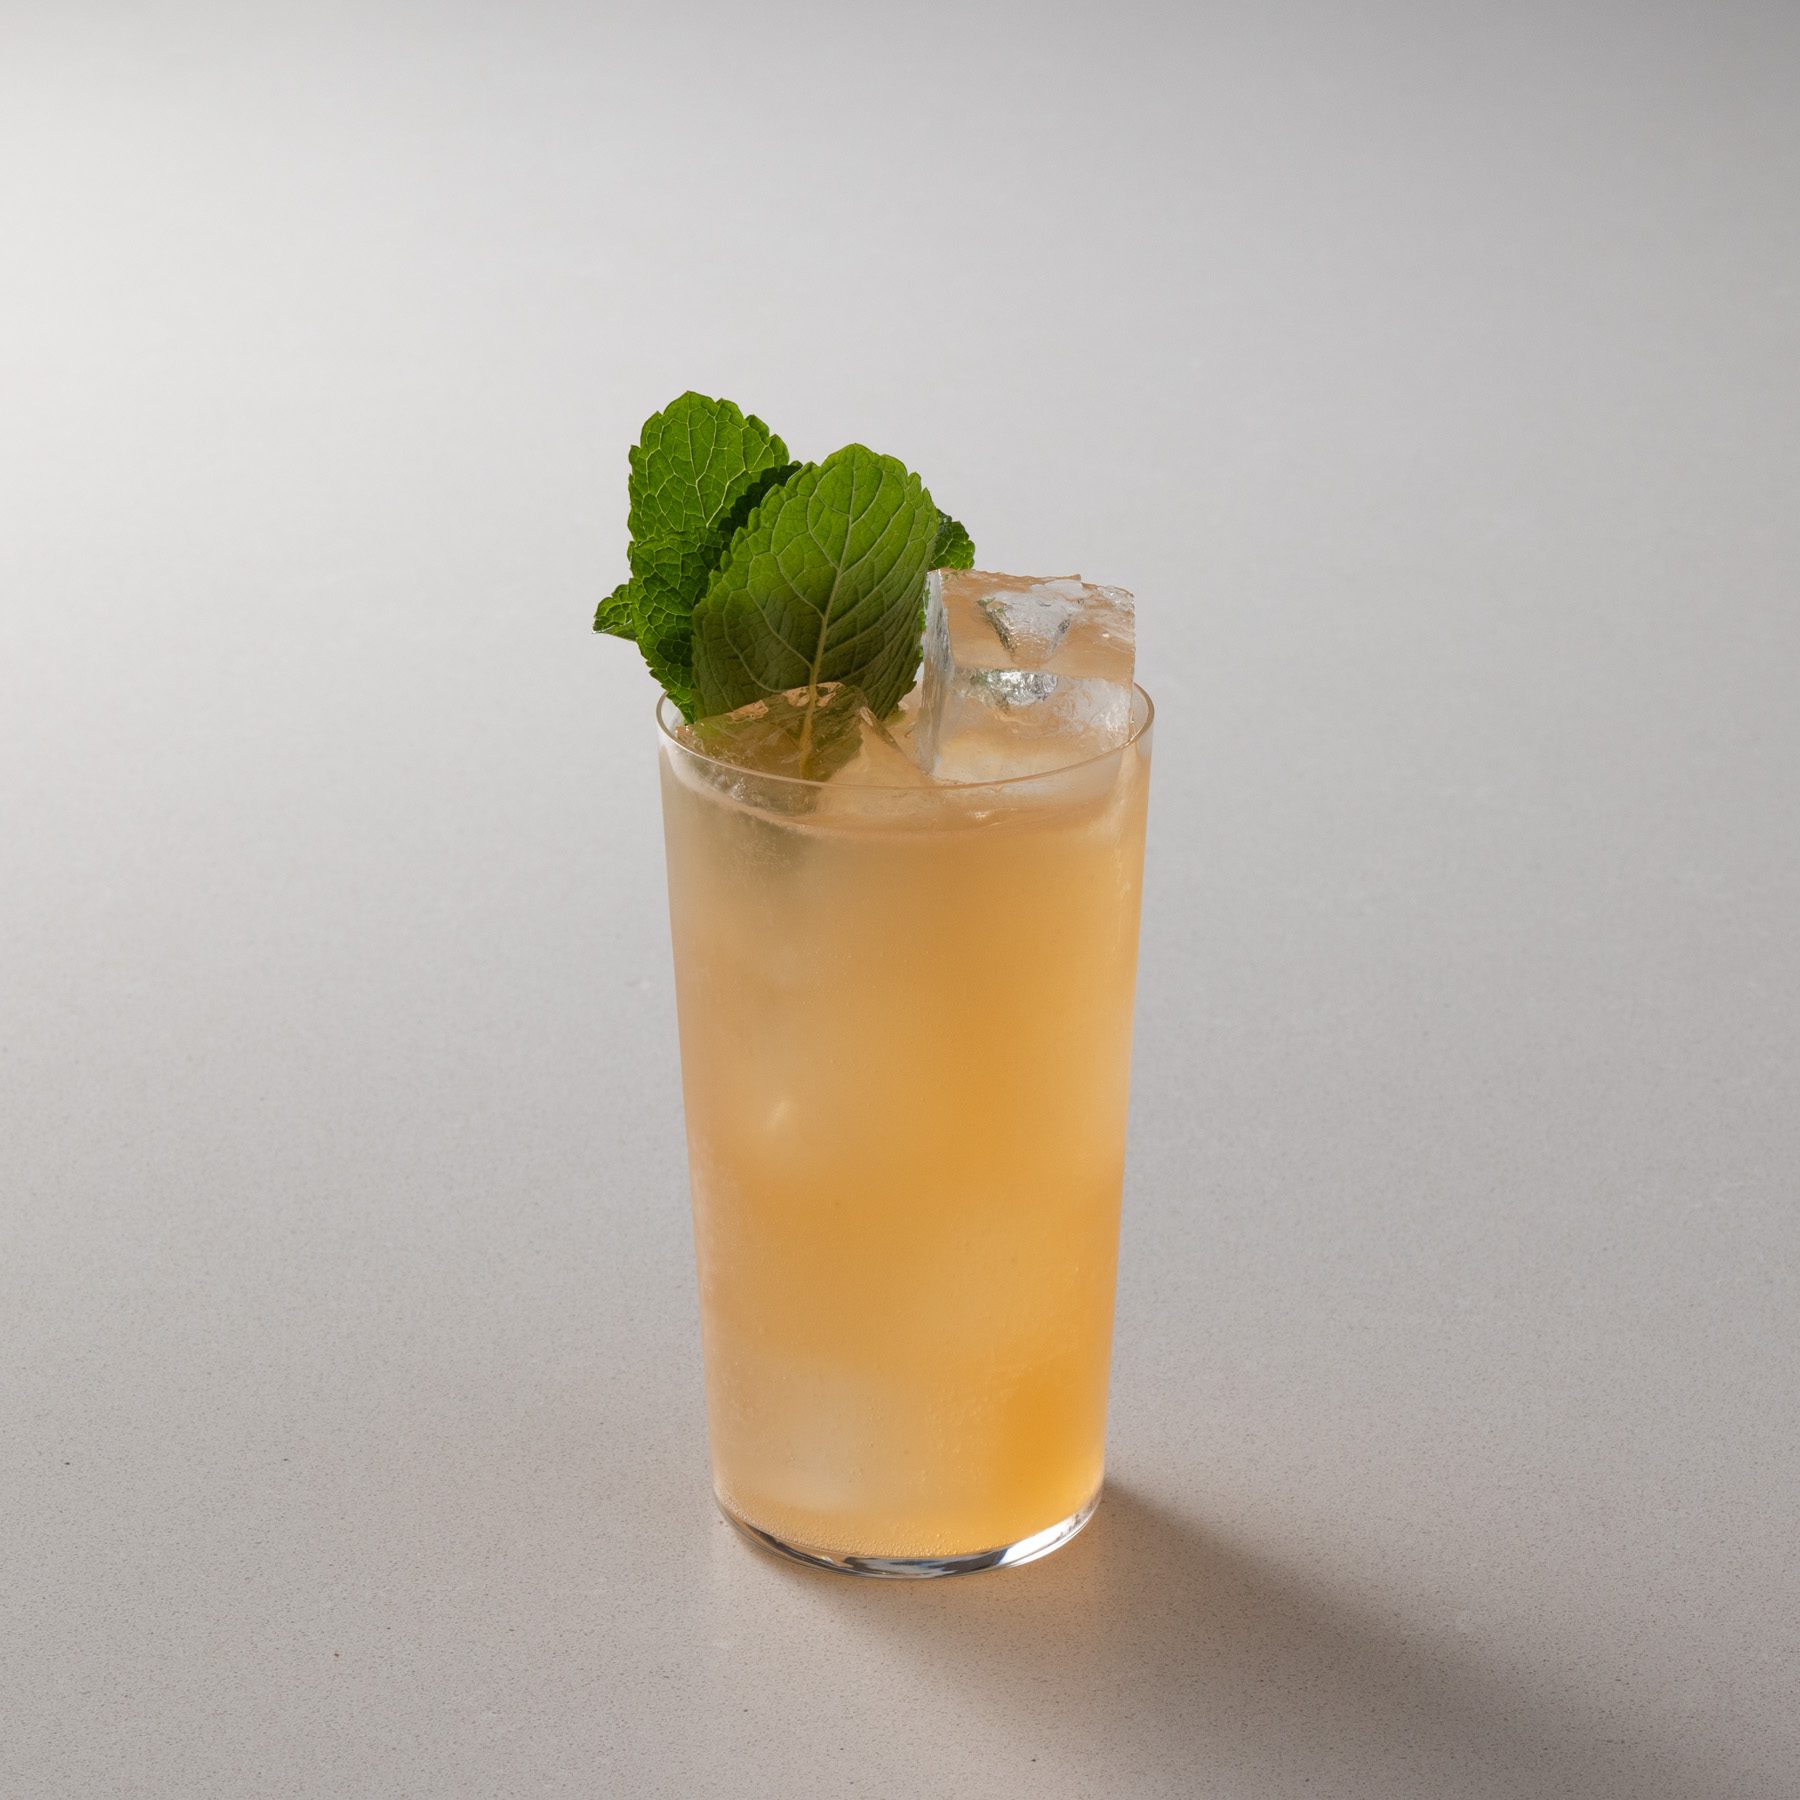 Bourbon Special cocktail